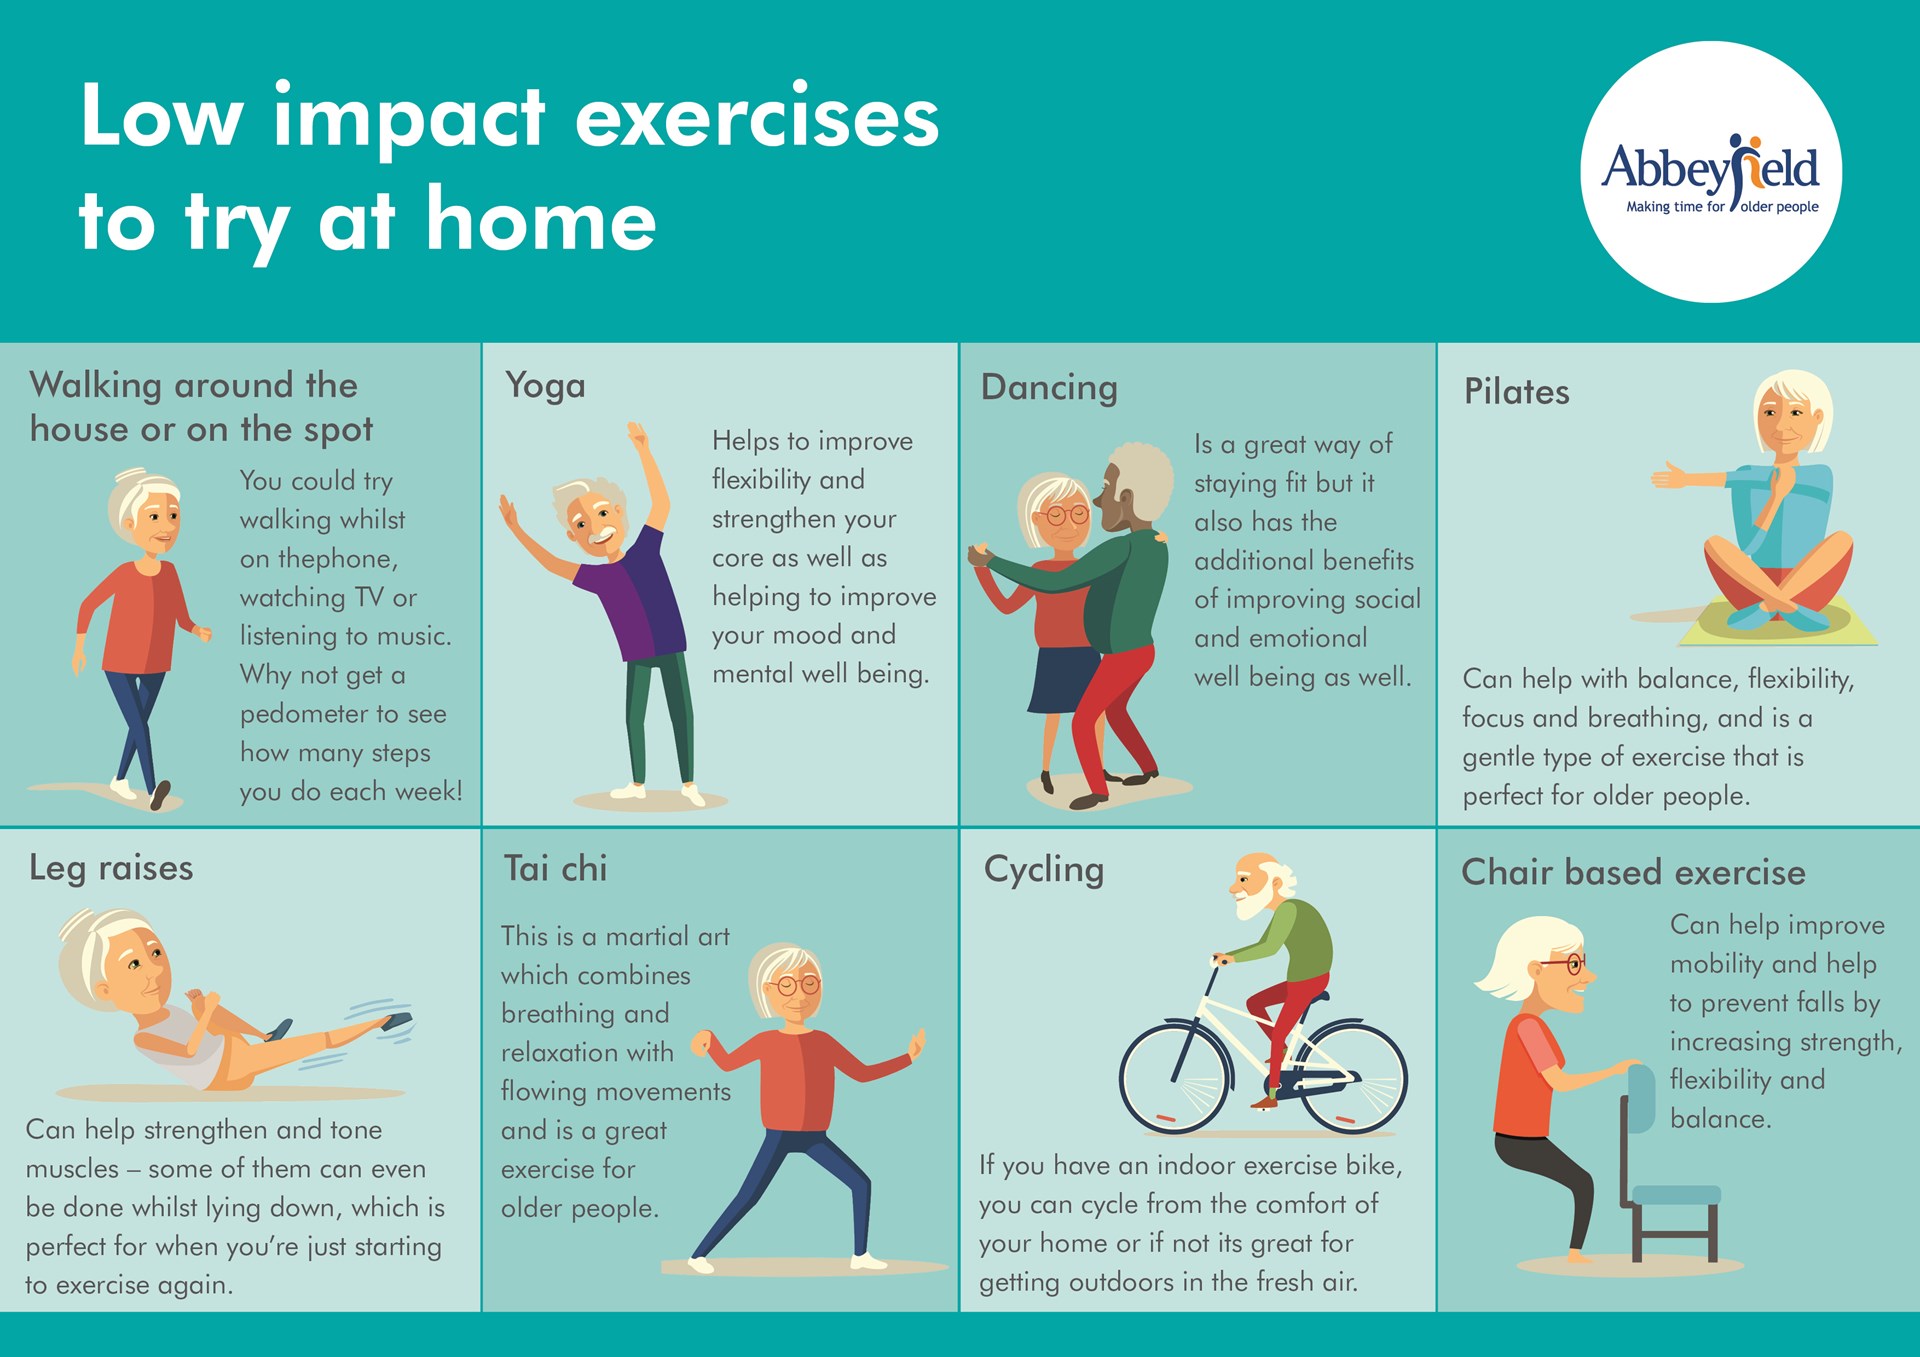 Tips for Improving Senior Mobility through Flexibility Exercises